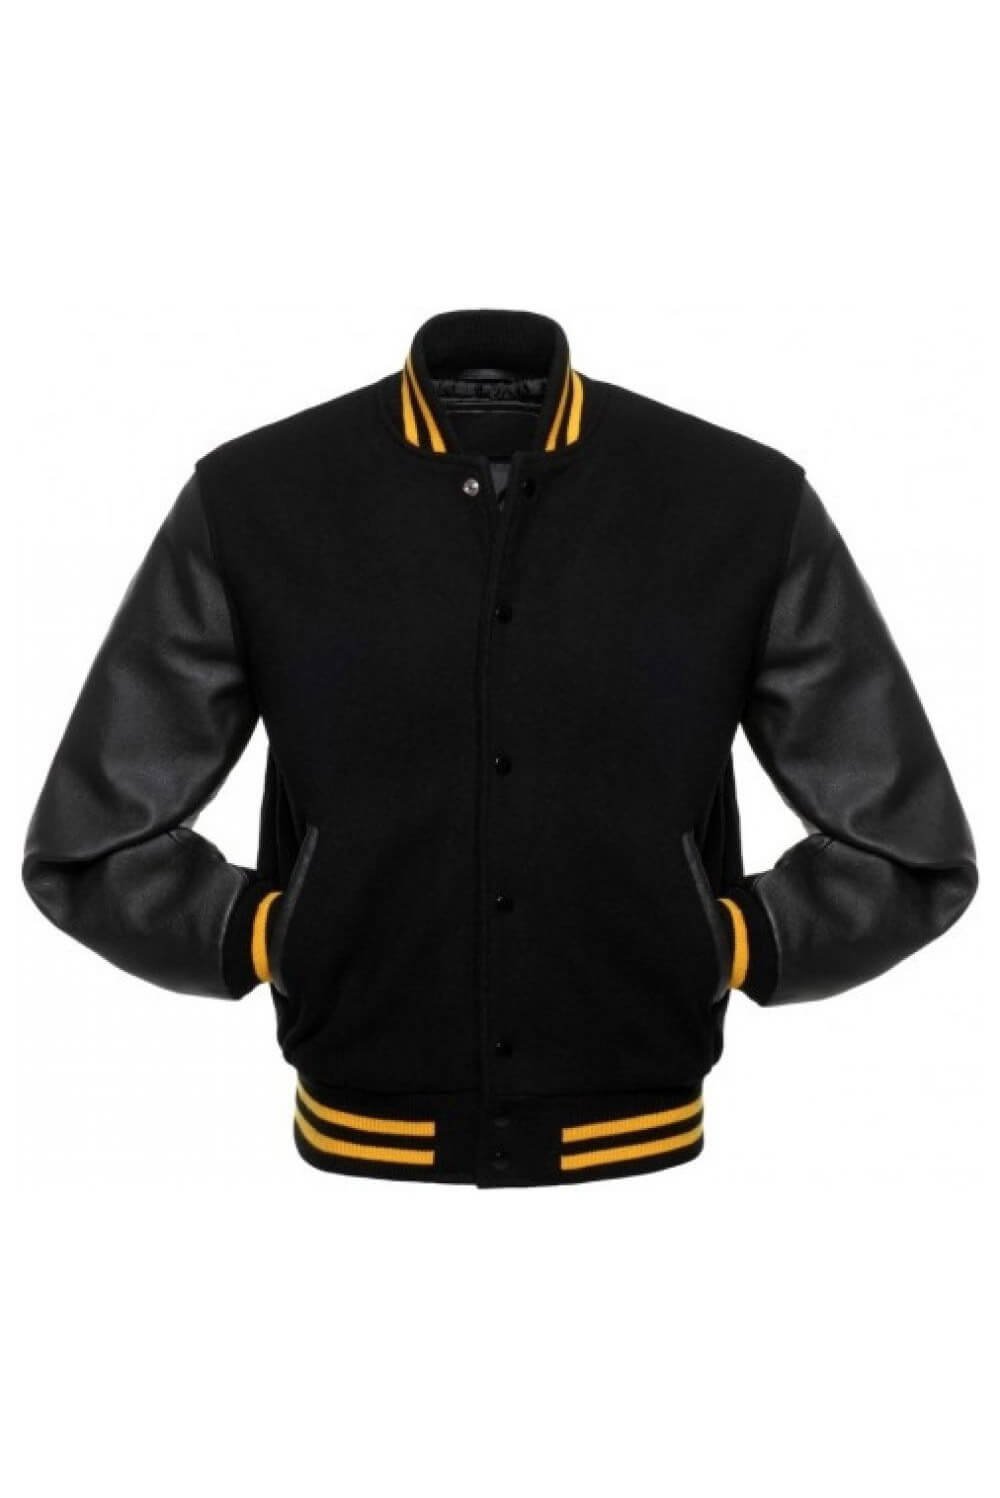 Black Varsity Letterman Jacket with Gold Stripes - $149.99